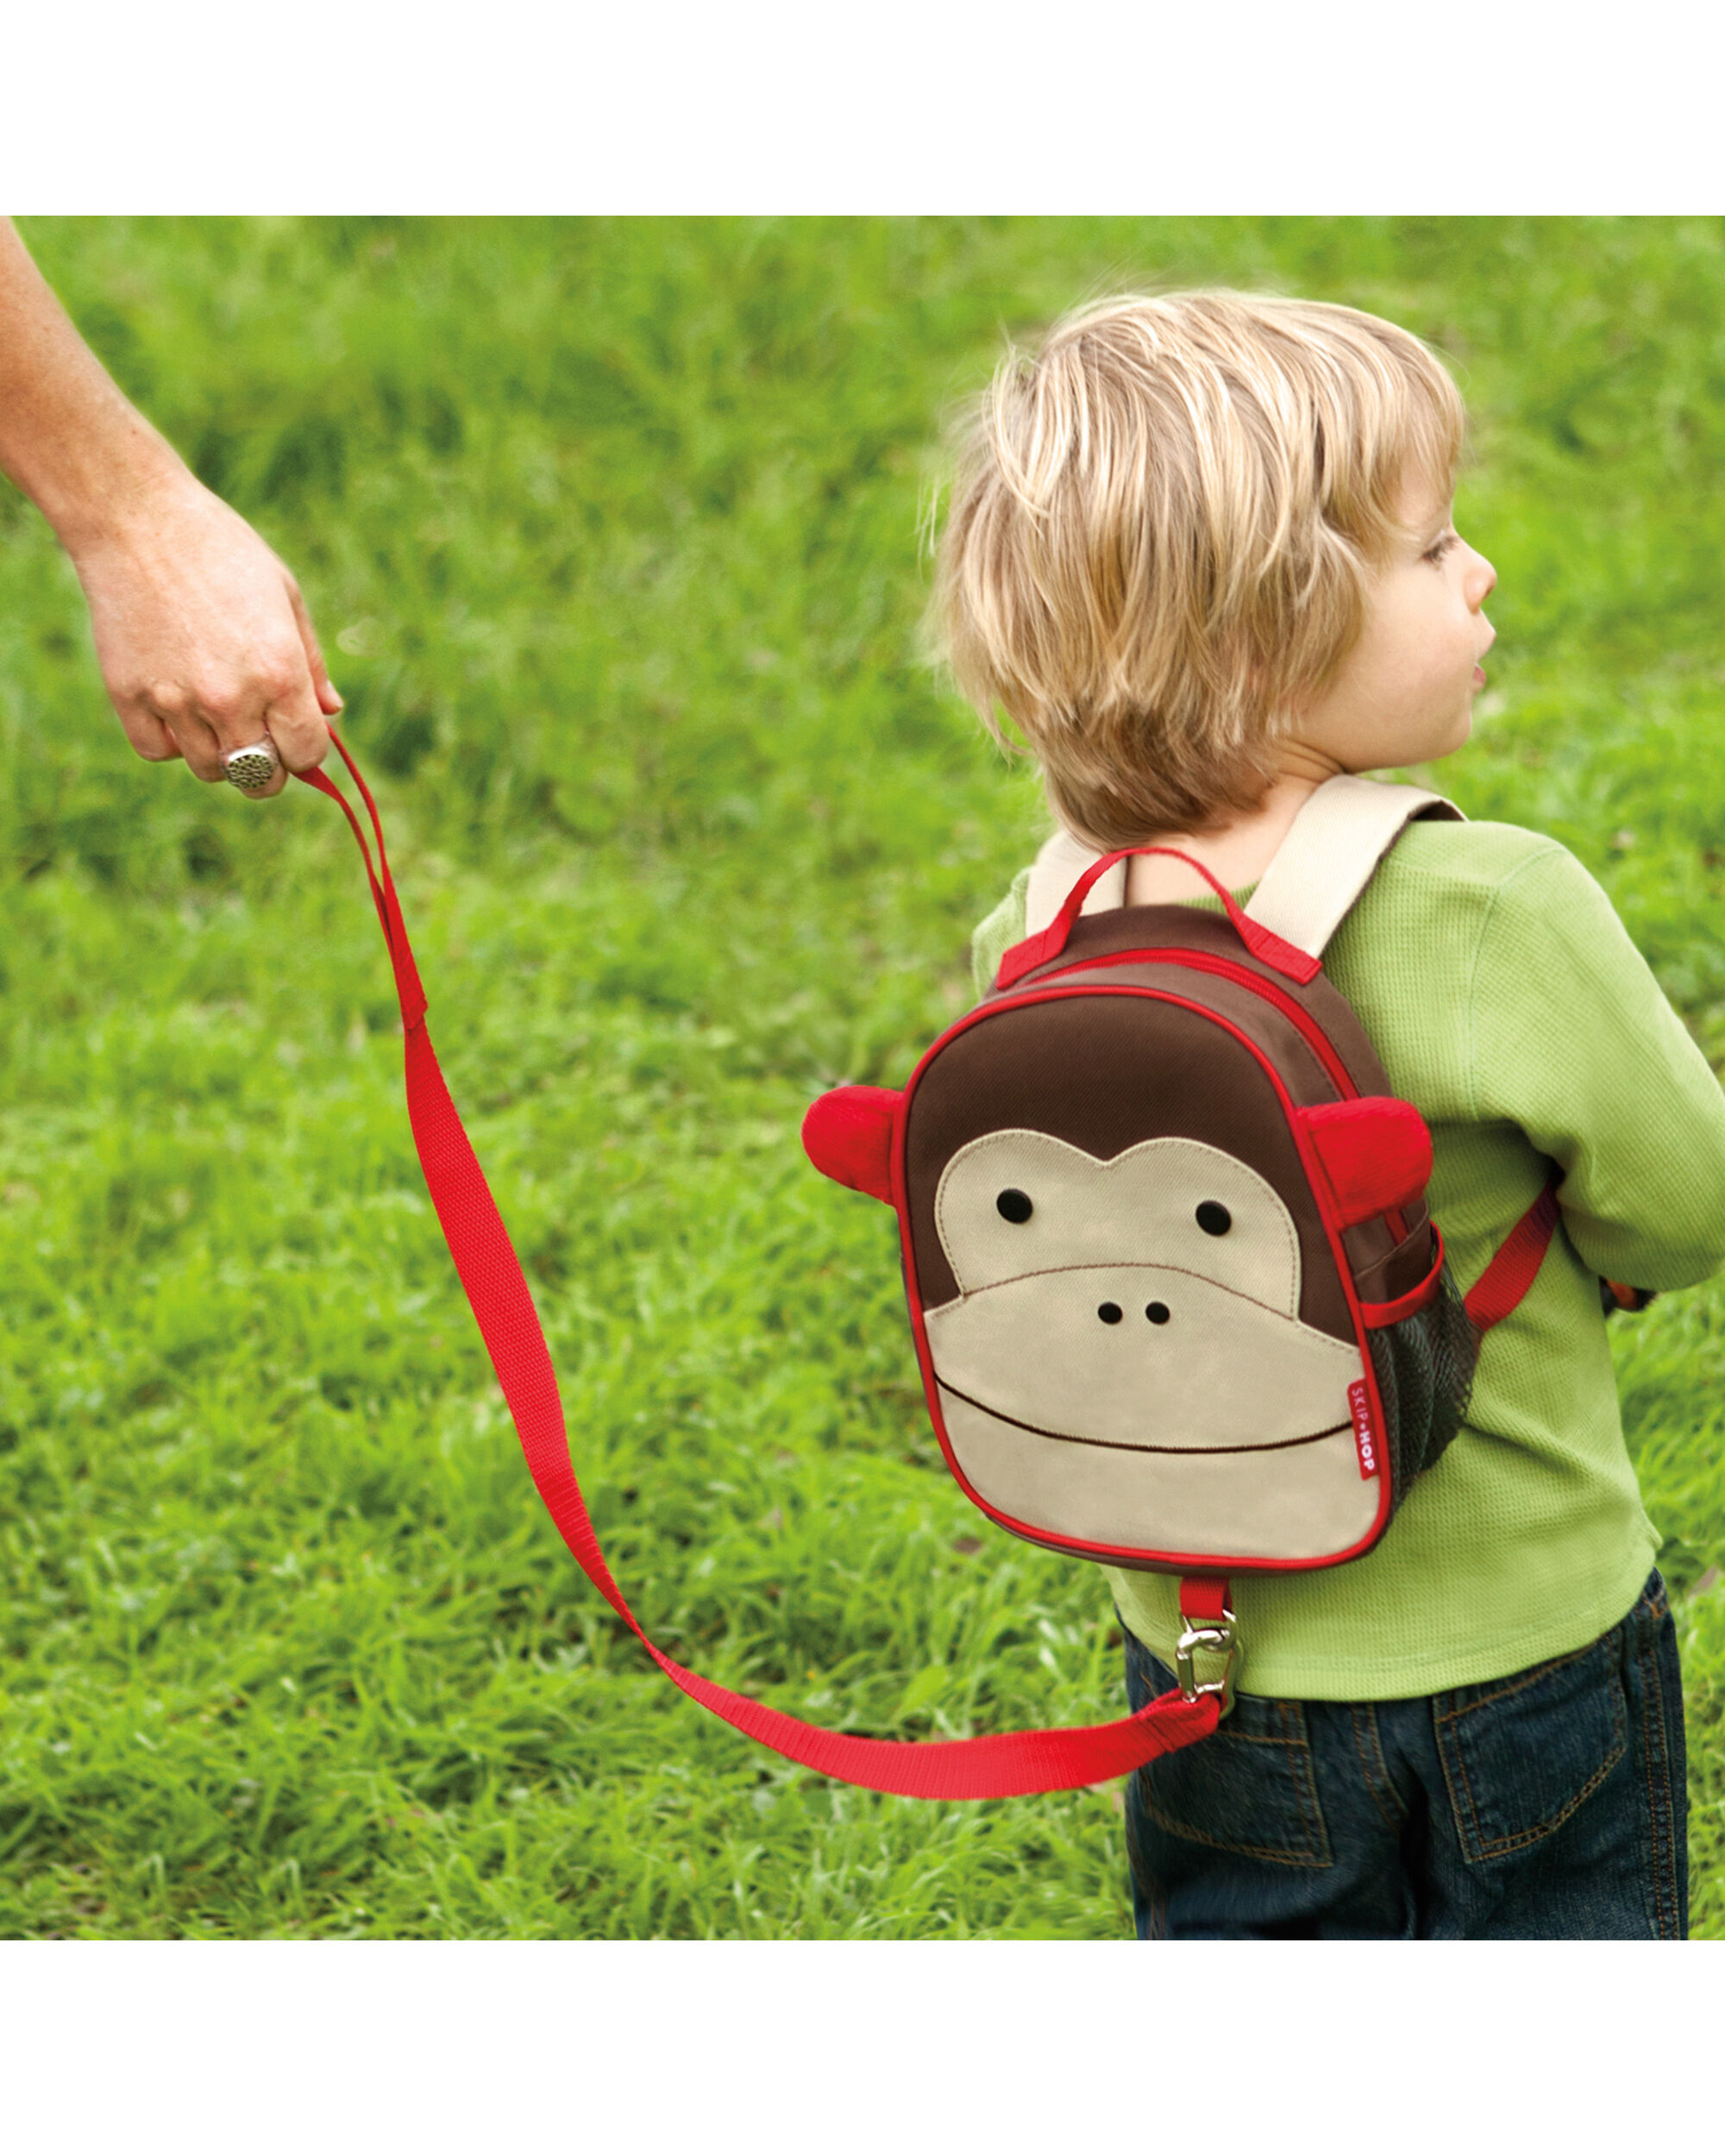 Toddler Backpack Leash for Child & Kids 